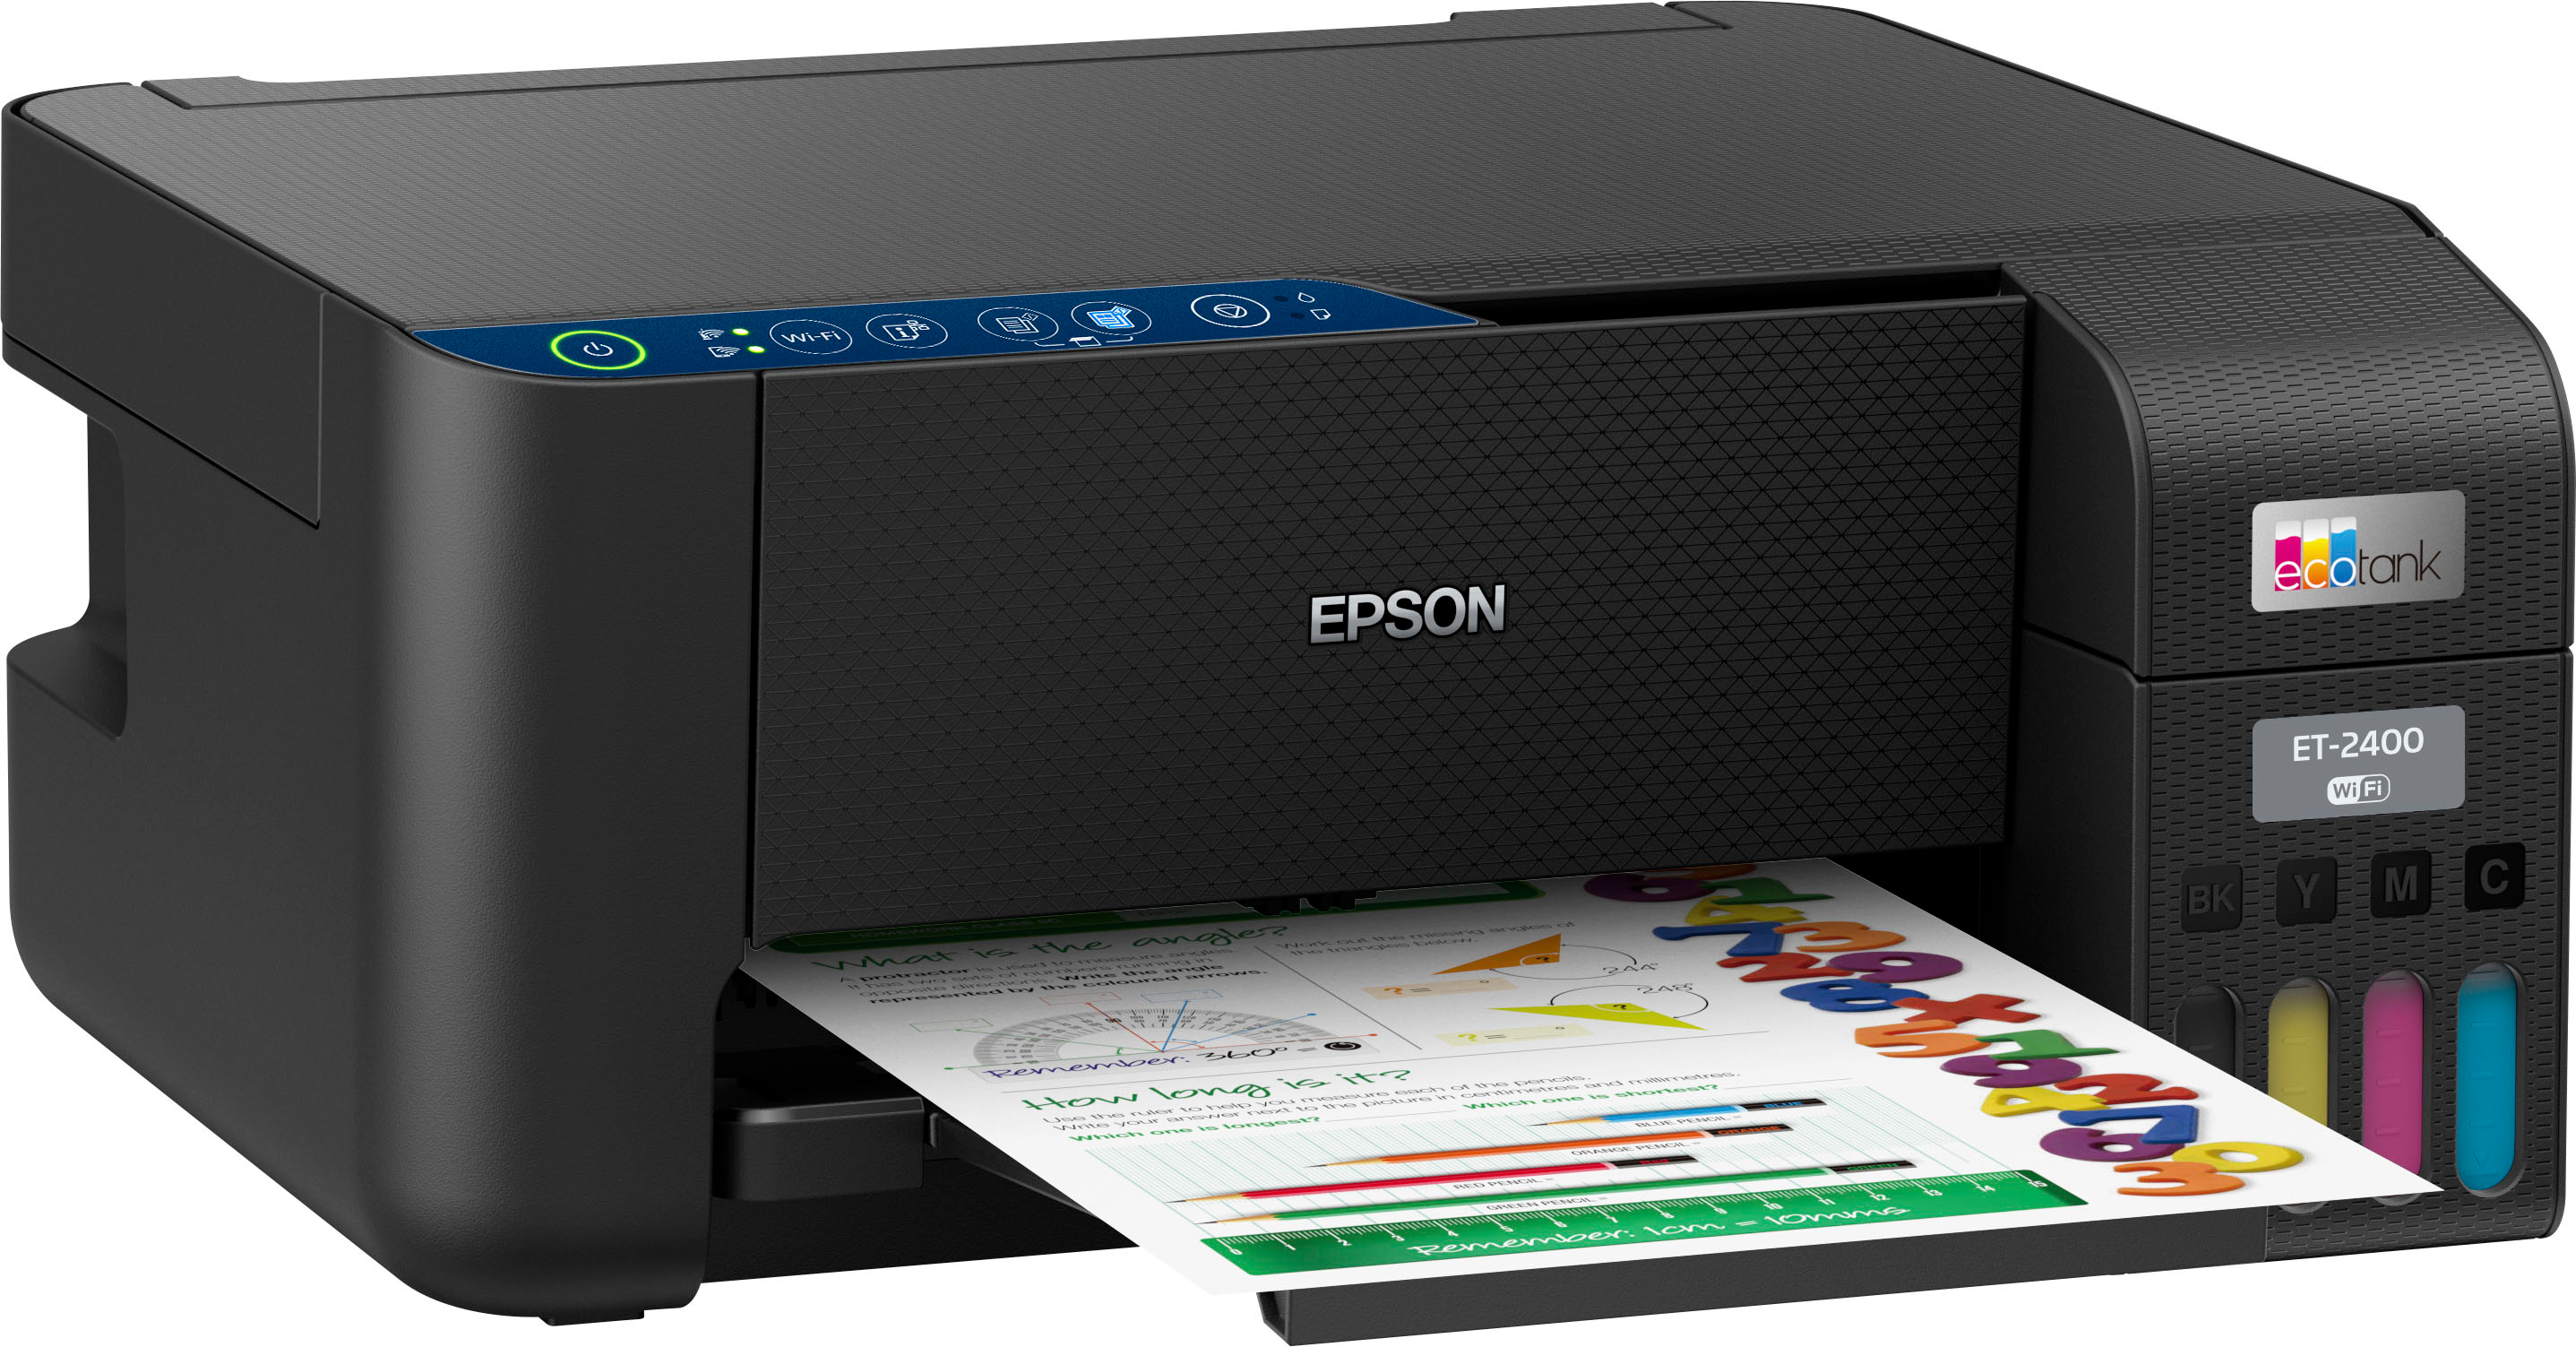 Epson EcoTank ET-2400 Review 